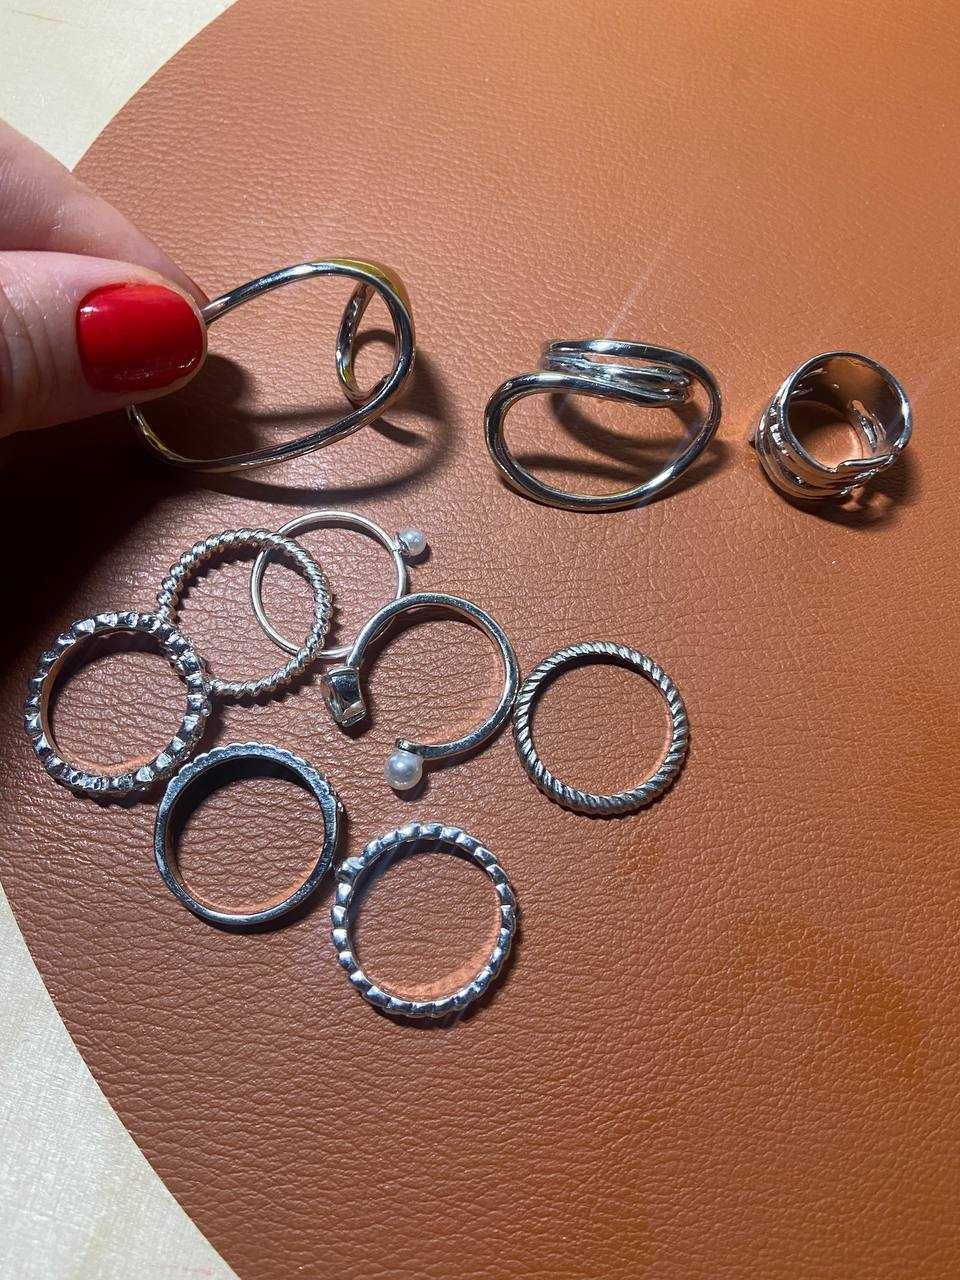 бижутерия кольцо жіночі прикраси украшения набор колец кольца